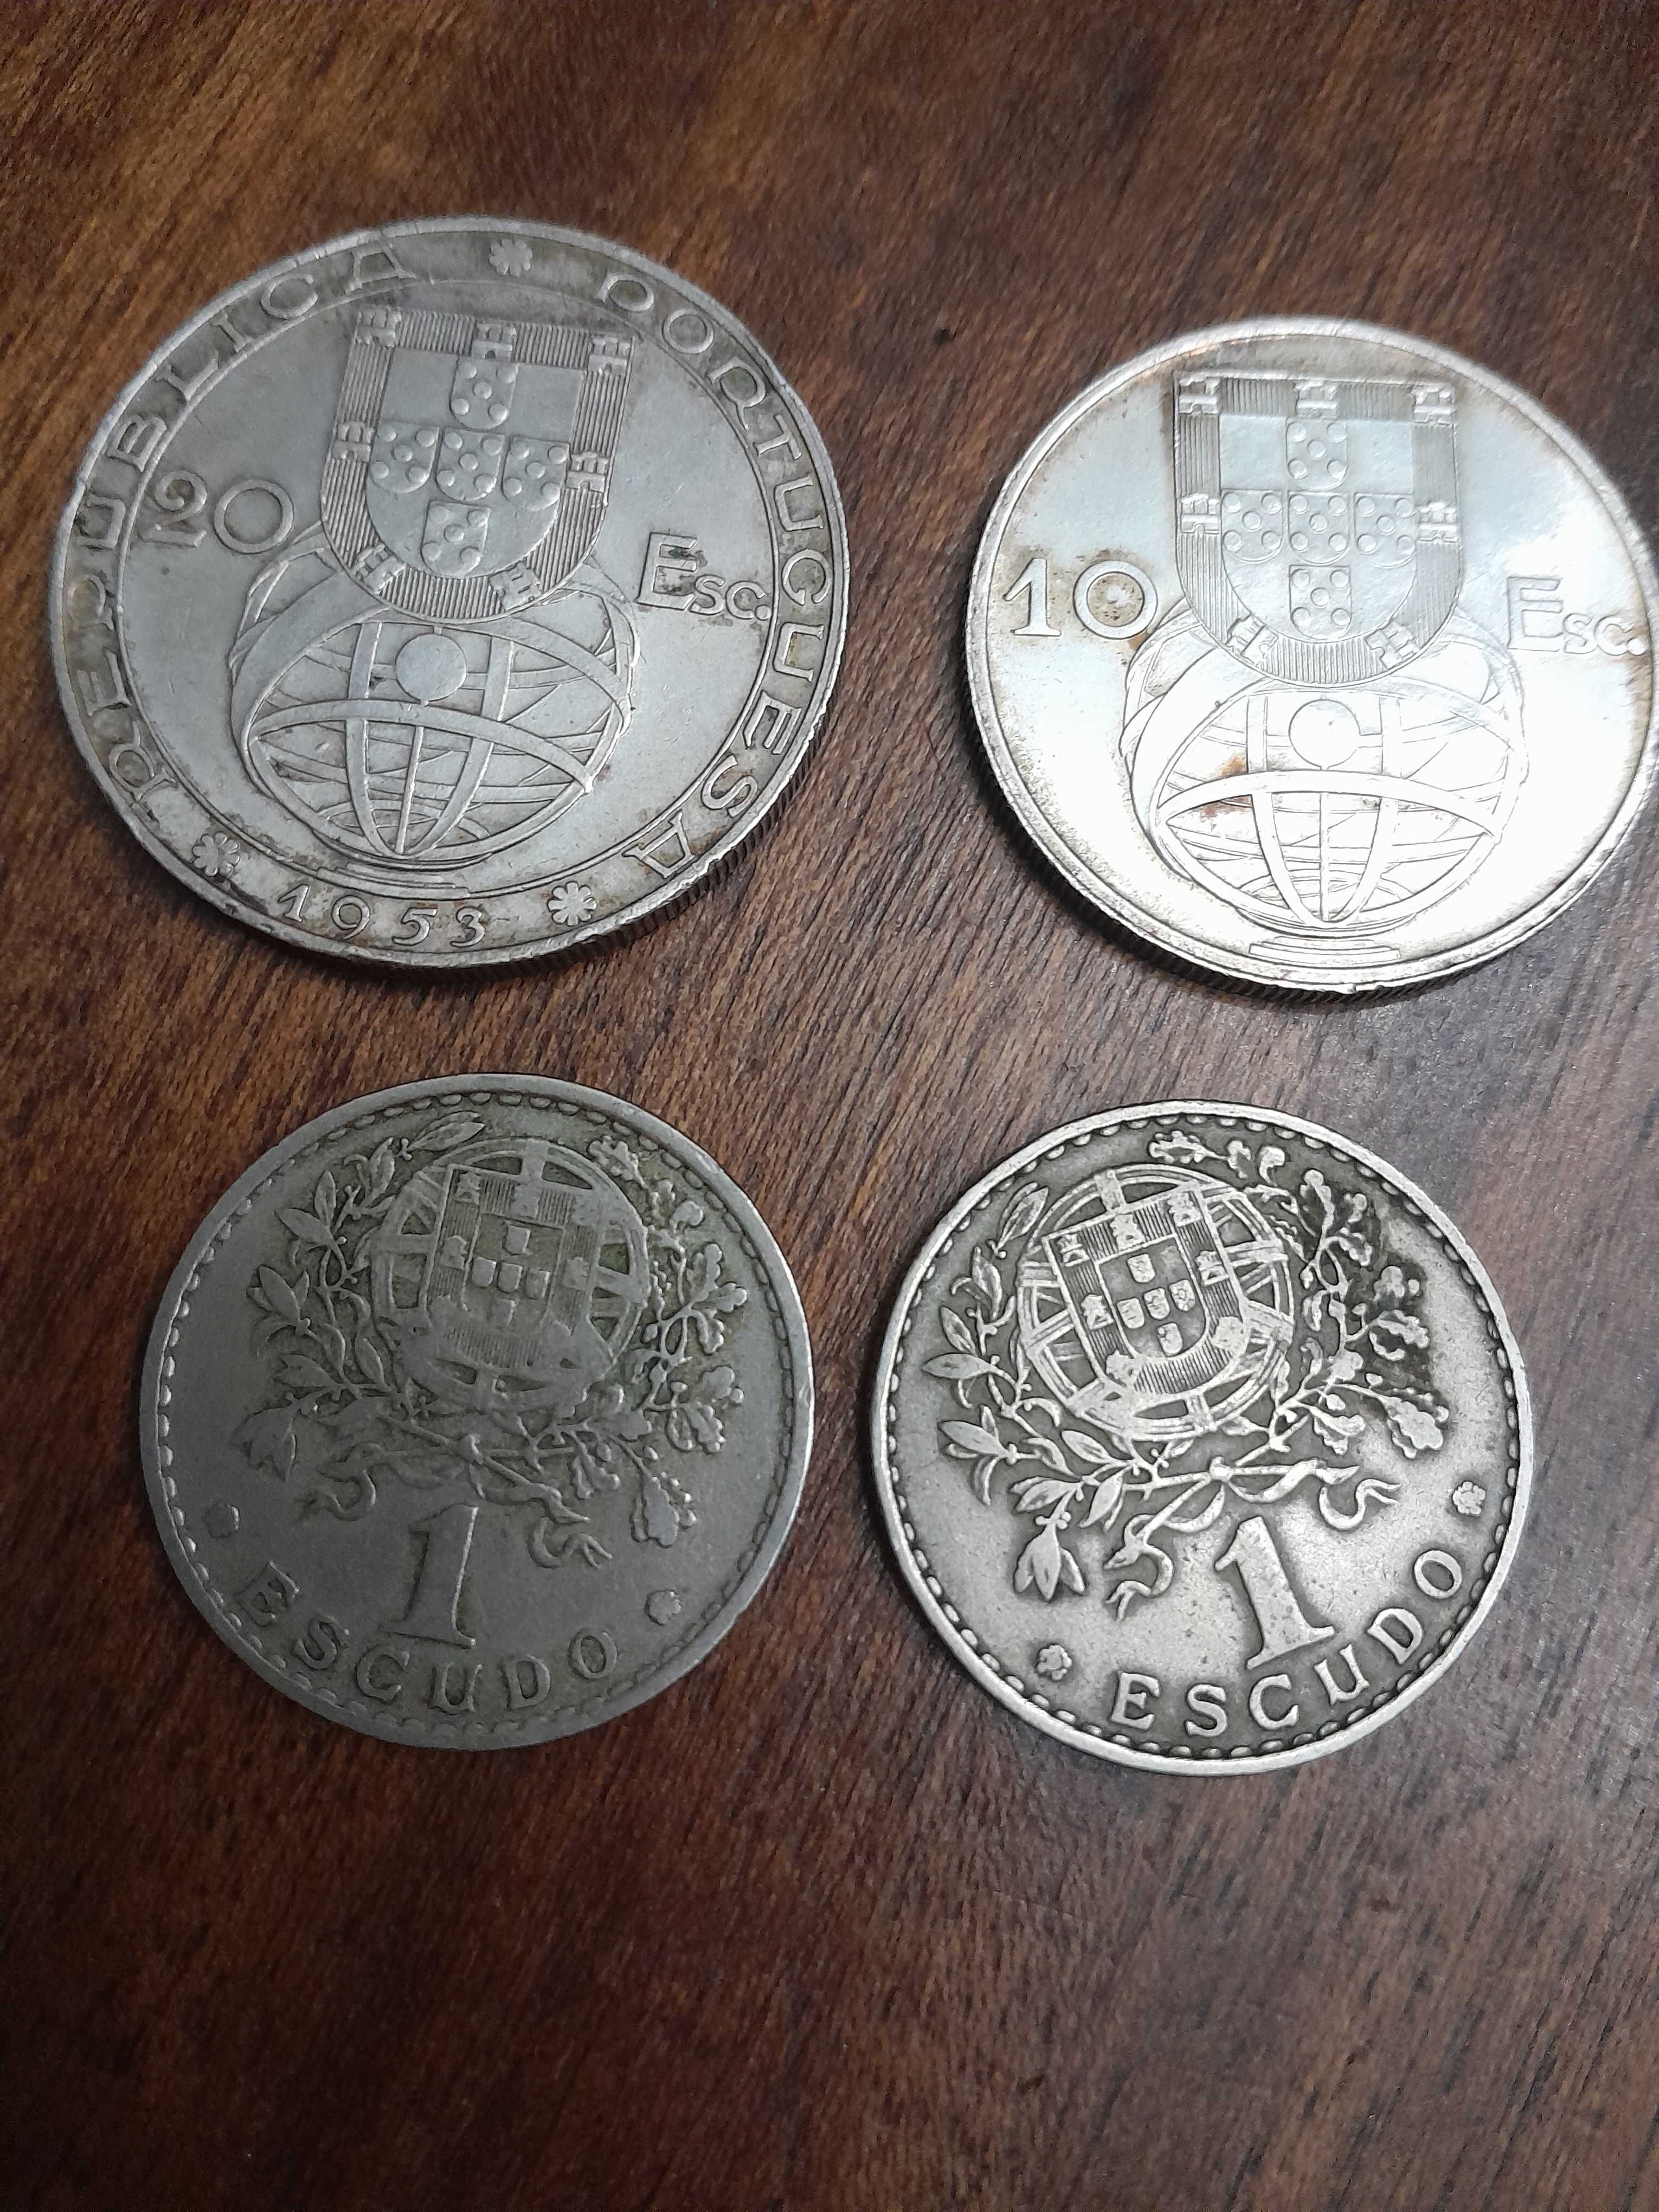 Vendo conjunto de moedas.44 moedas de 50 centavos 1 de 50 escudos